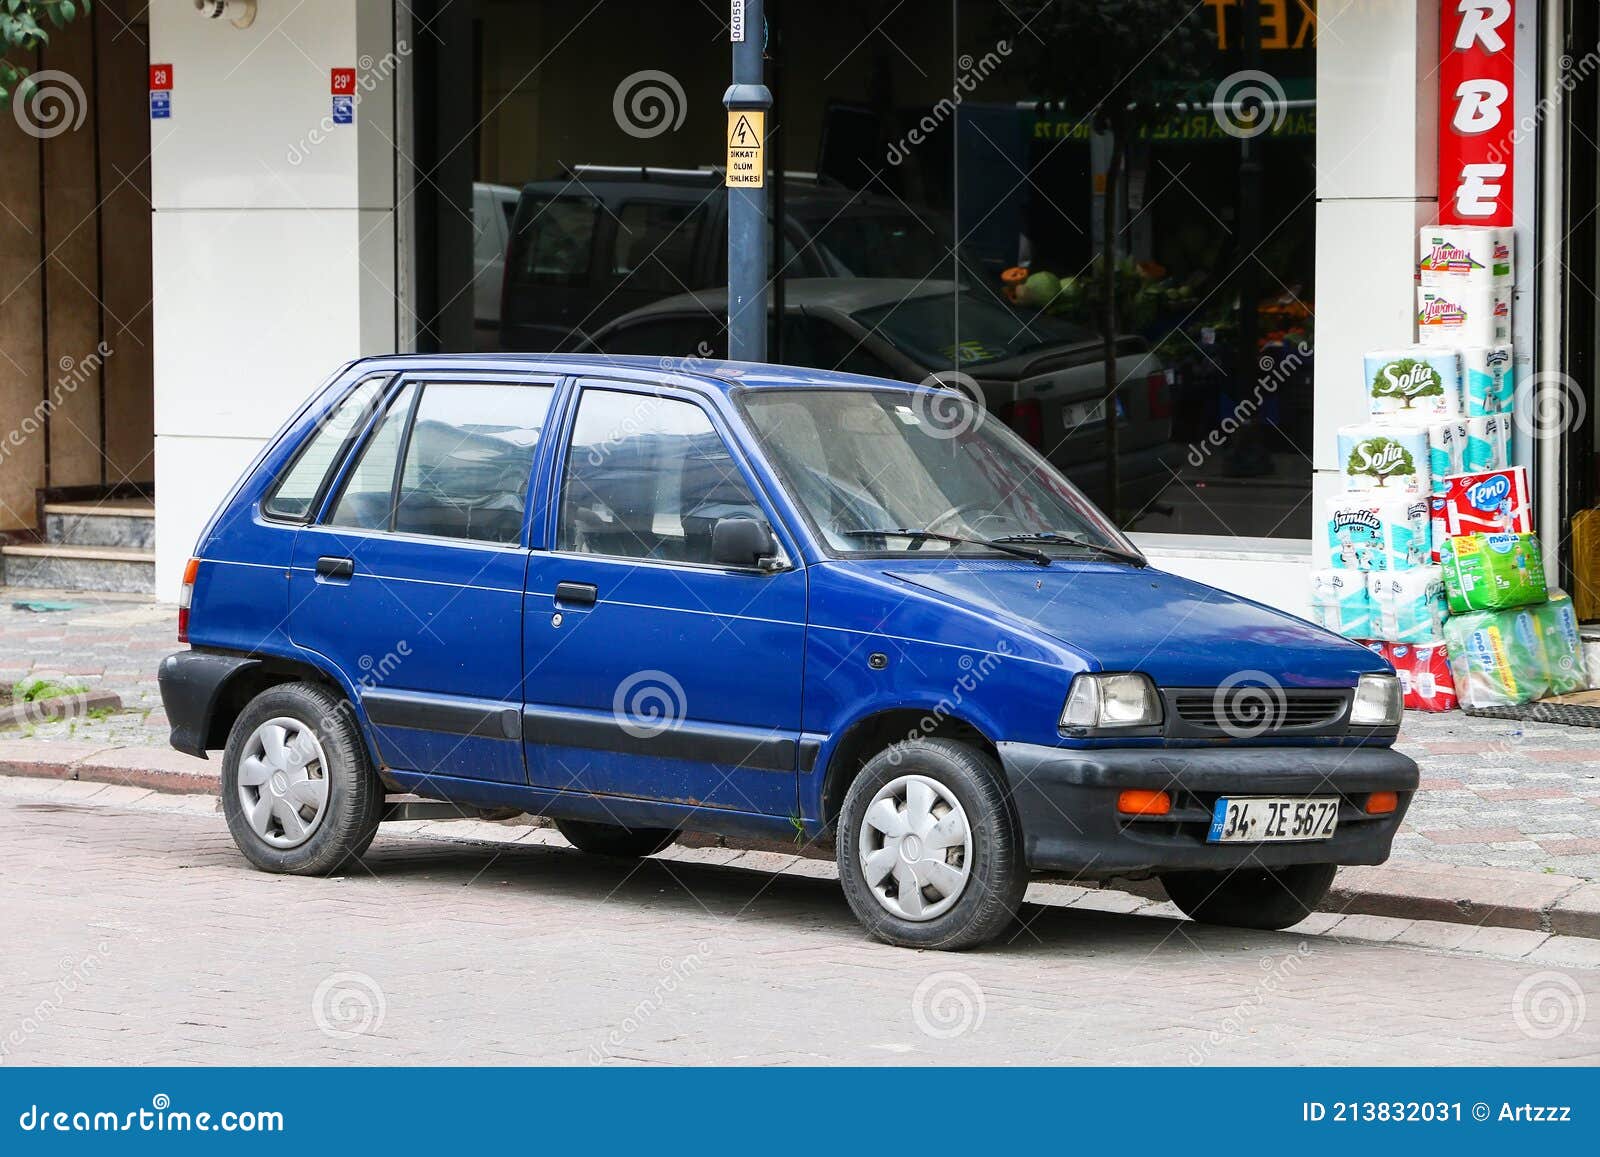 Suzuki Alto Price in Pakistan Images Reviews  Specs  PakWheels